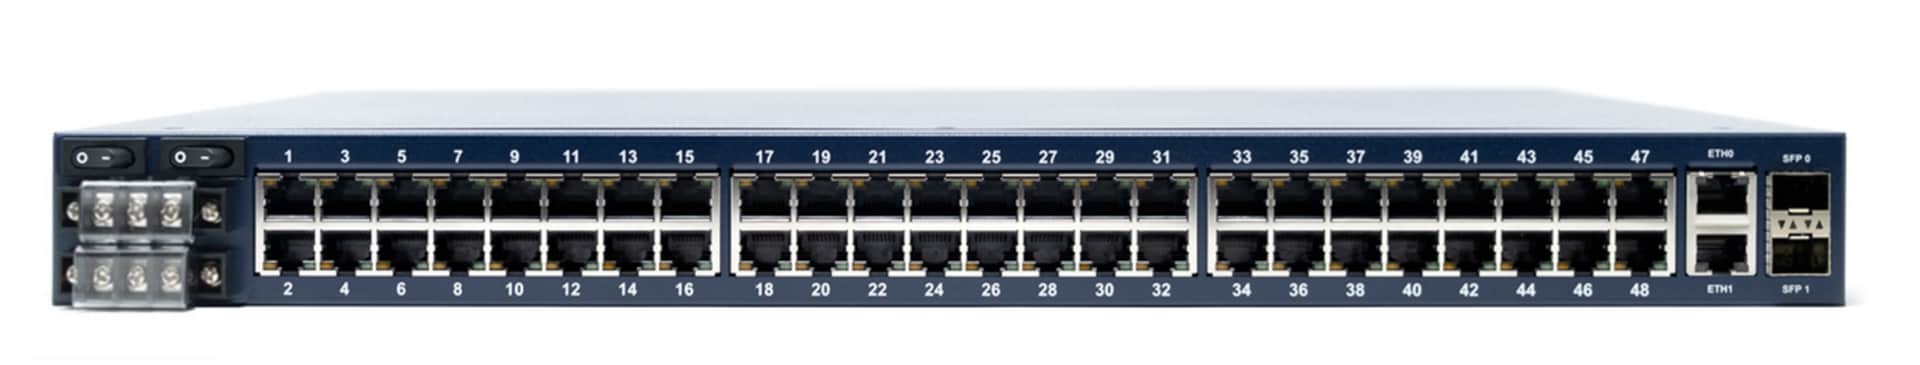 ZPE 48-Port Nodegrid Serial Console Plus Router